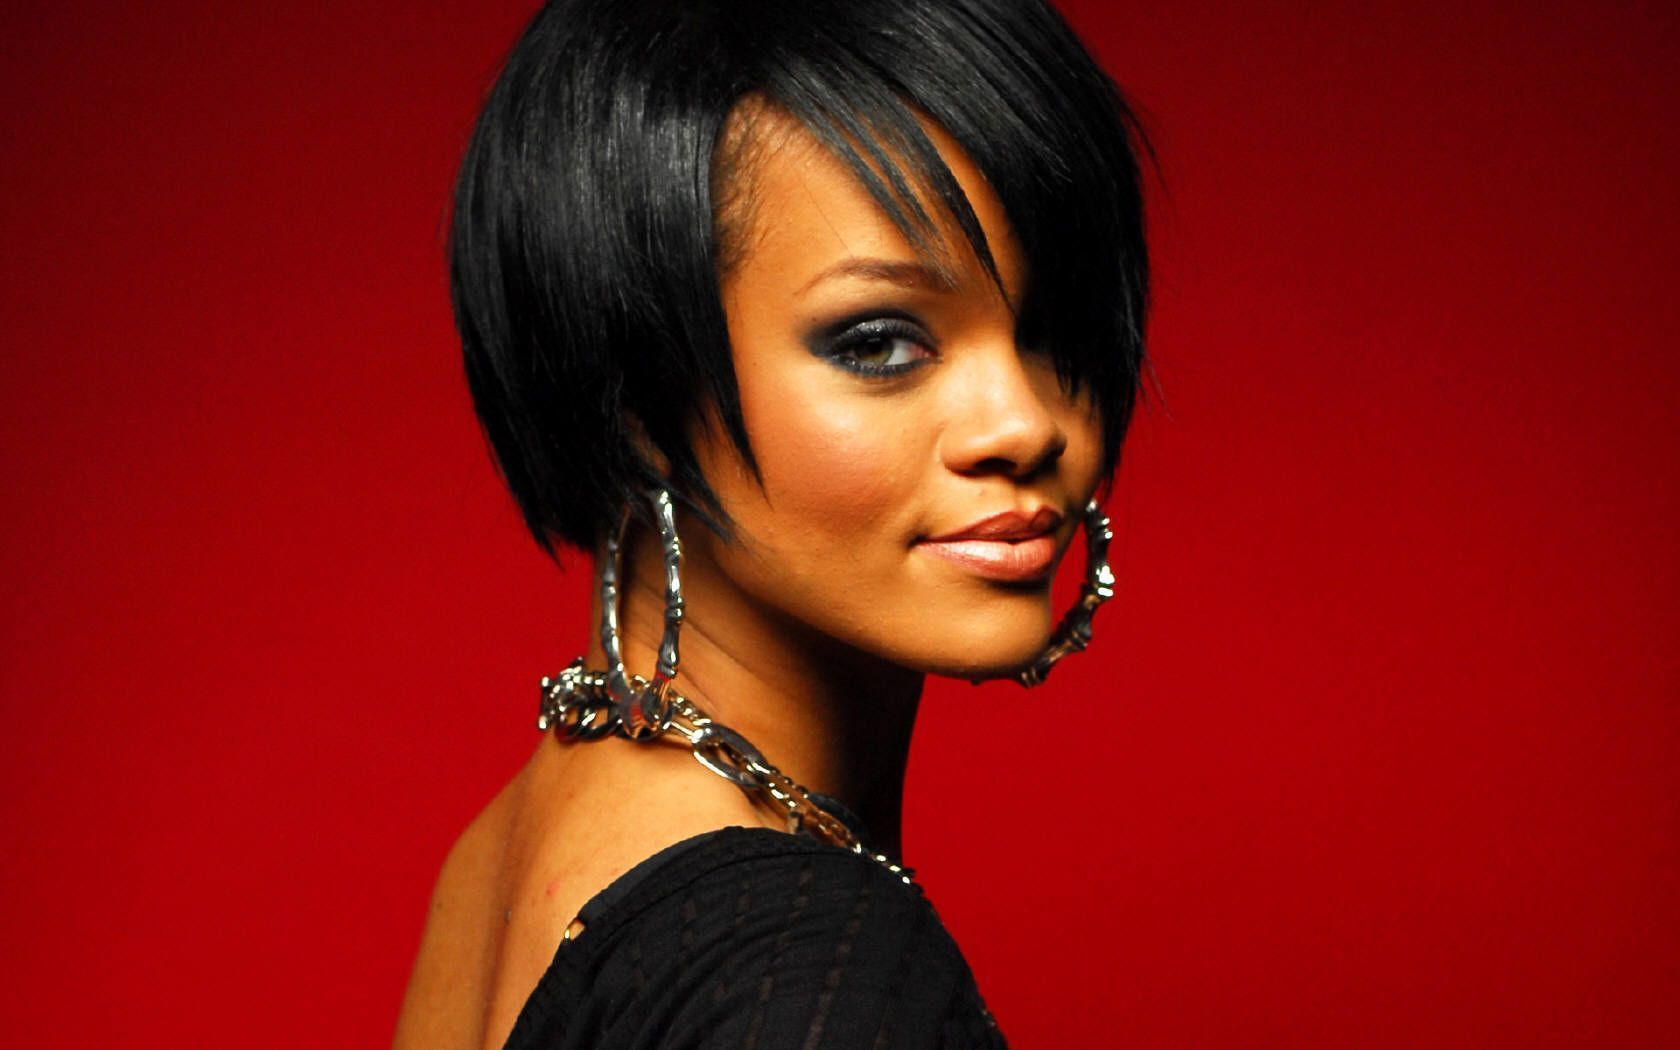 Rihanna Wallpapers - Free Rihanna Wallpapers, Desktop Backgrounds